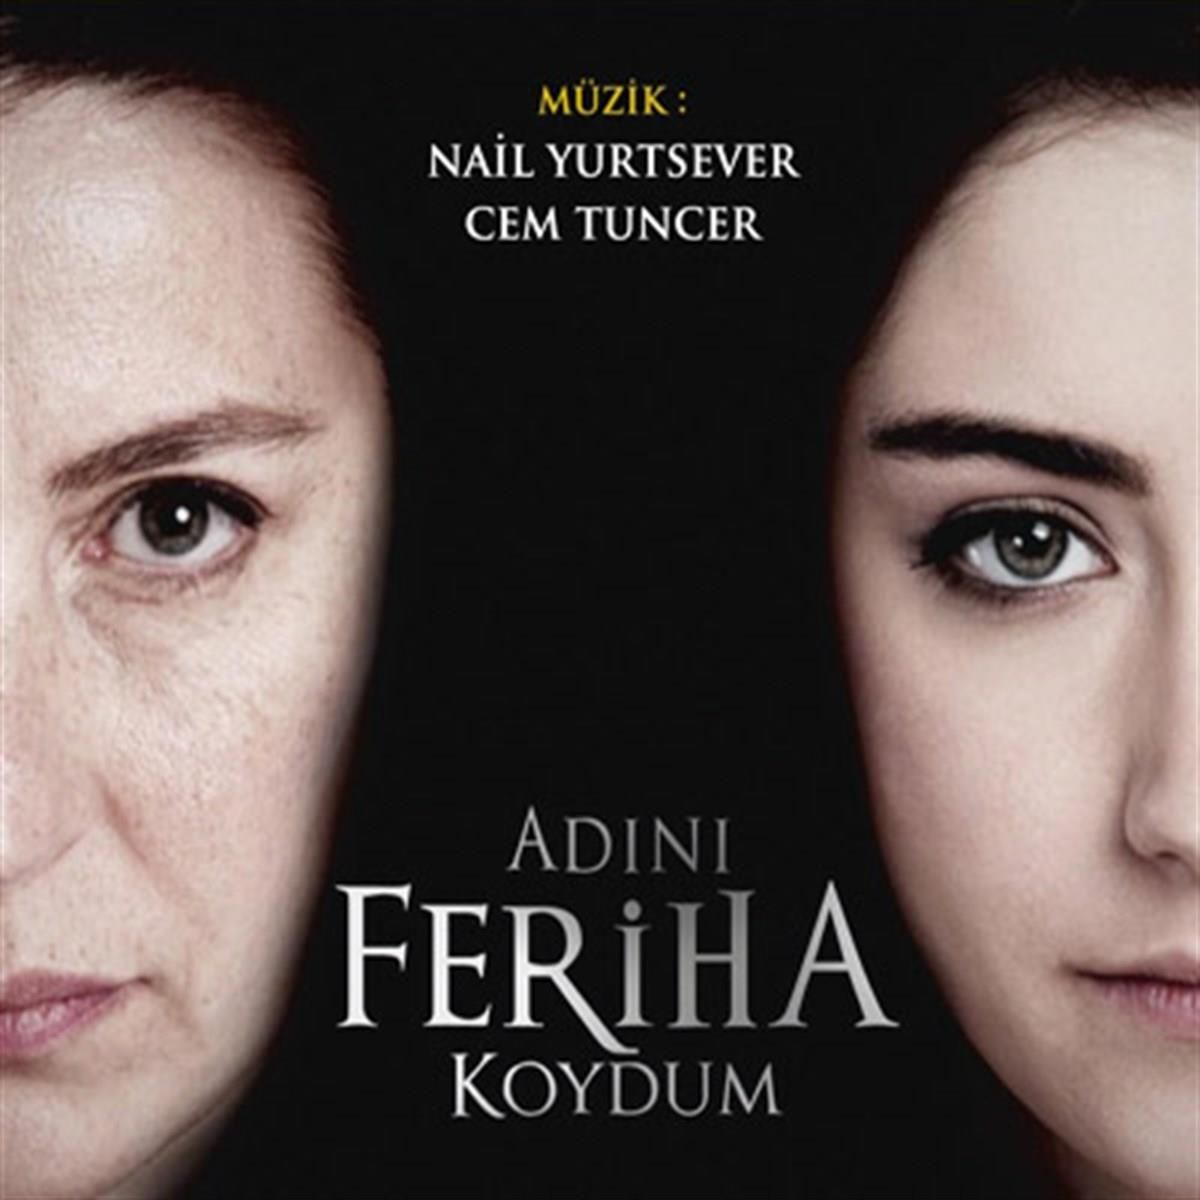 ADINI FERİHA KOYDUM - ORİJİNAL DİZİ MÜZİKLERİ / SOUNDTRACK - CEM TUNCER, NAİL YURTSEVER (2012) - CD DIGIPAK AMBALAJINDA SIFIR